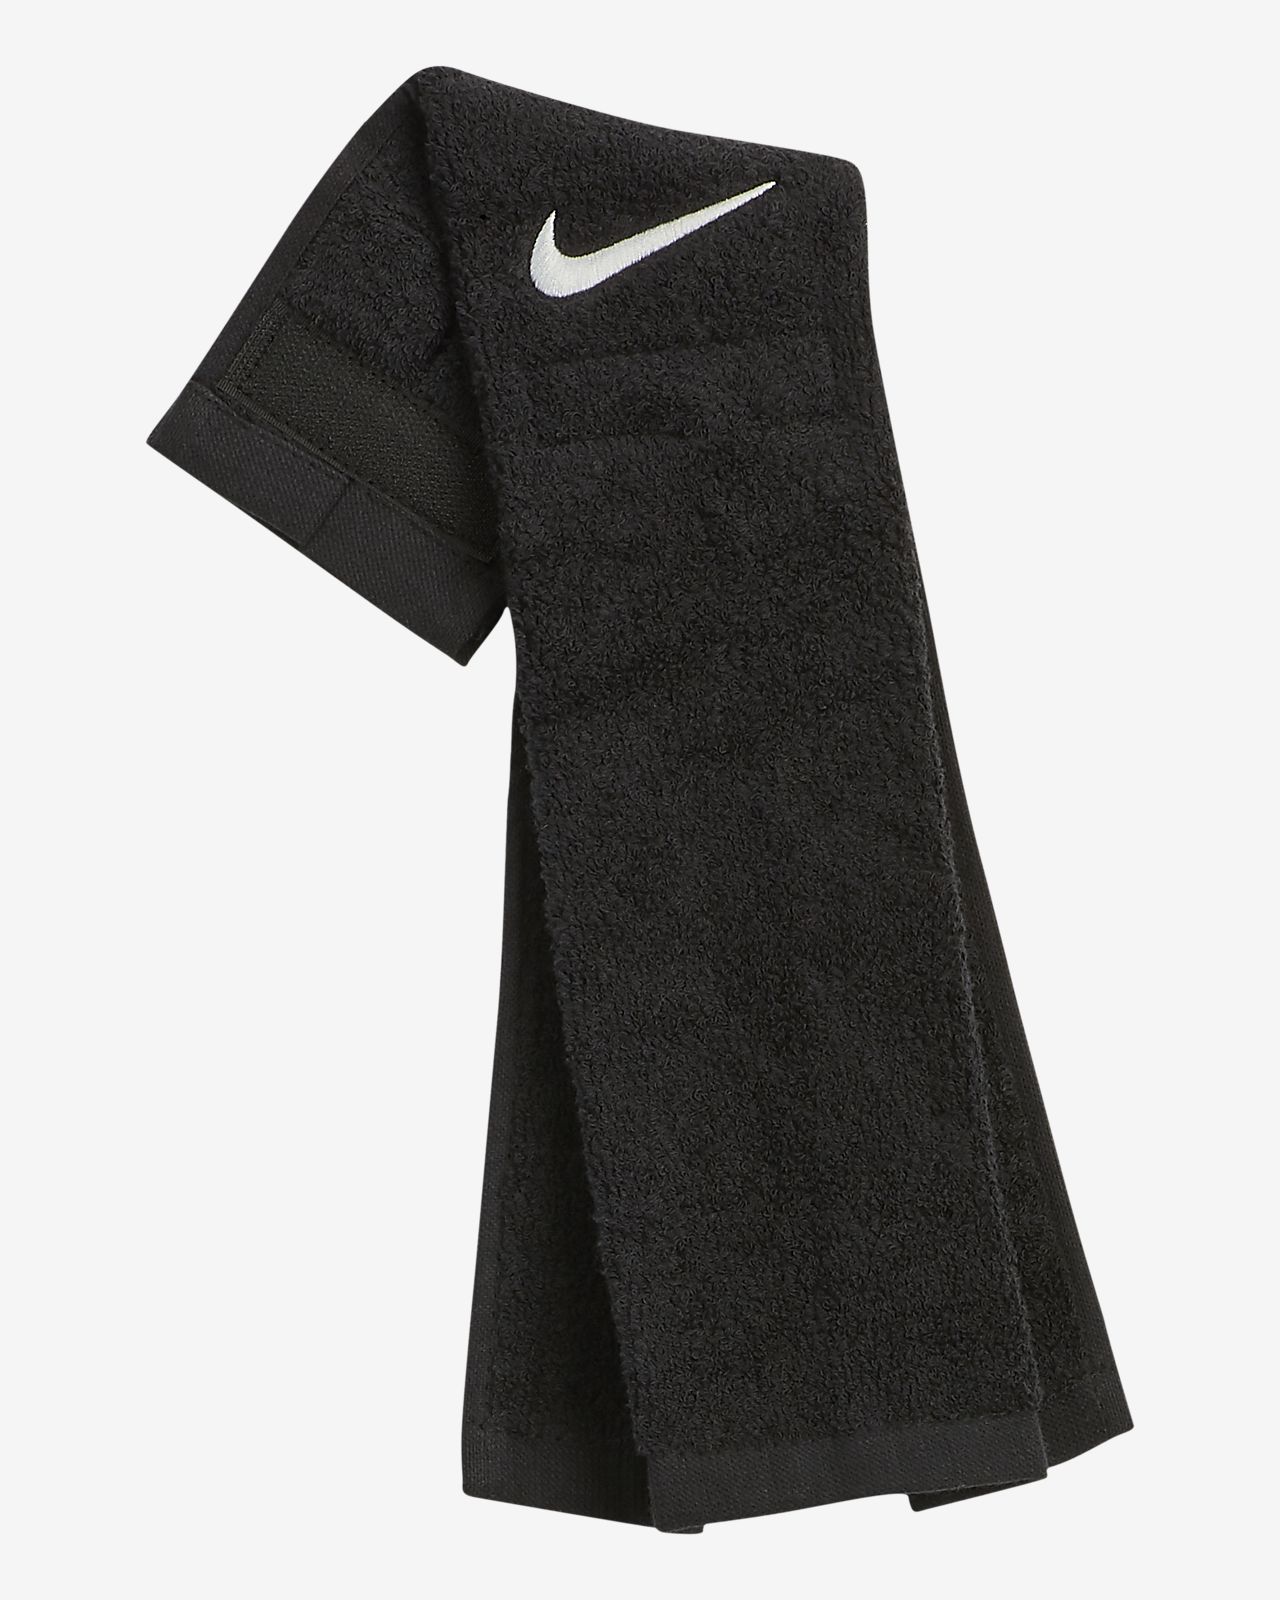 Nike Football Towel Black/White